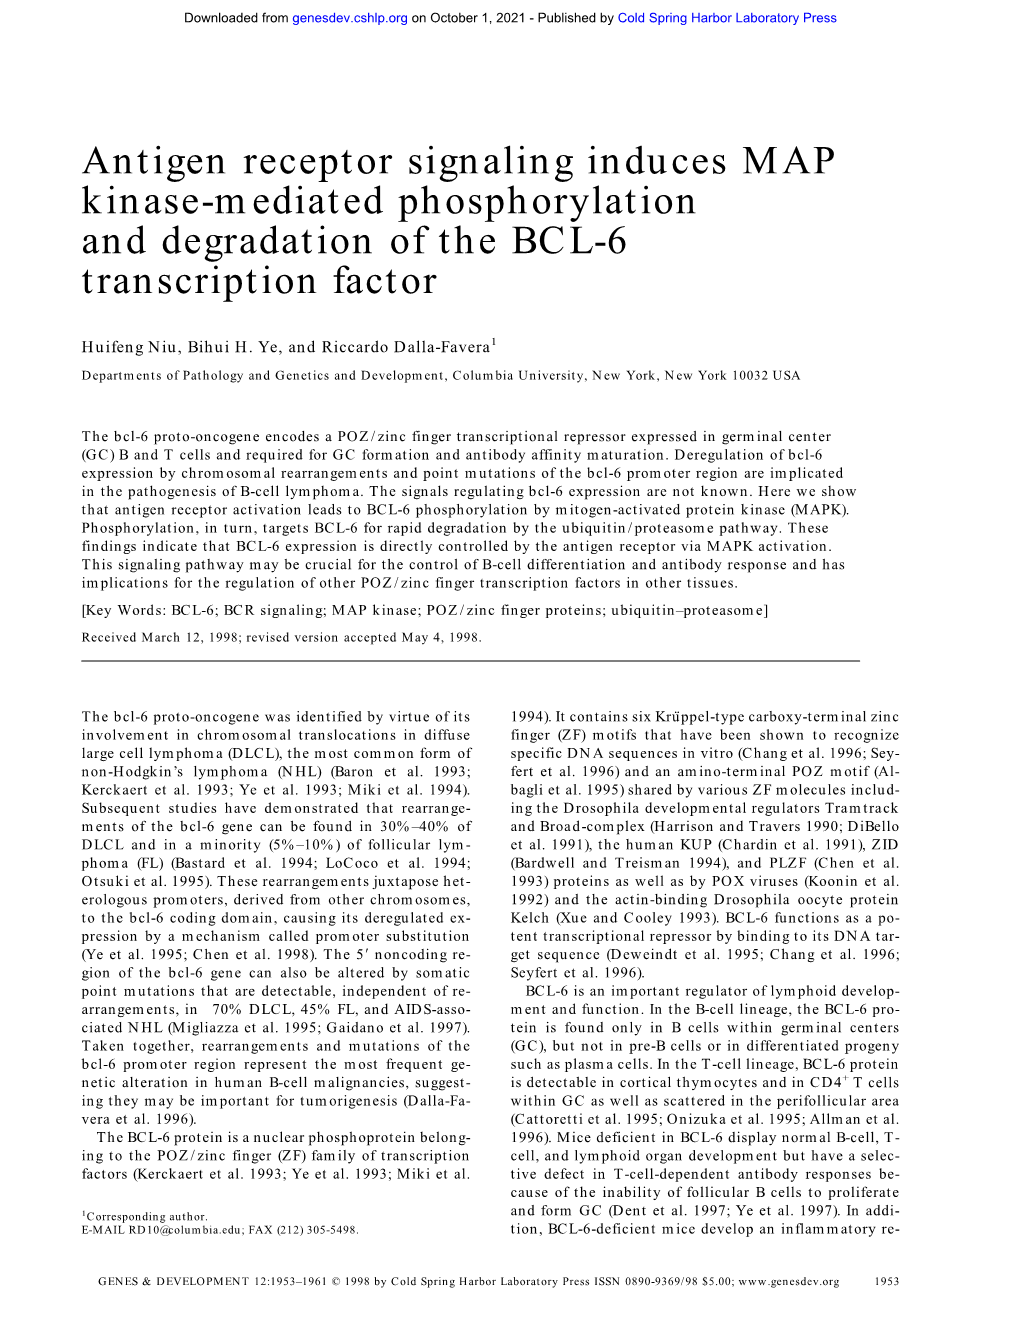 Antigen Receptor Signaling Induces MAP Kinase-Mediated Phosphorylation and Degradation of the BCL-6 Transcription Factor